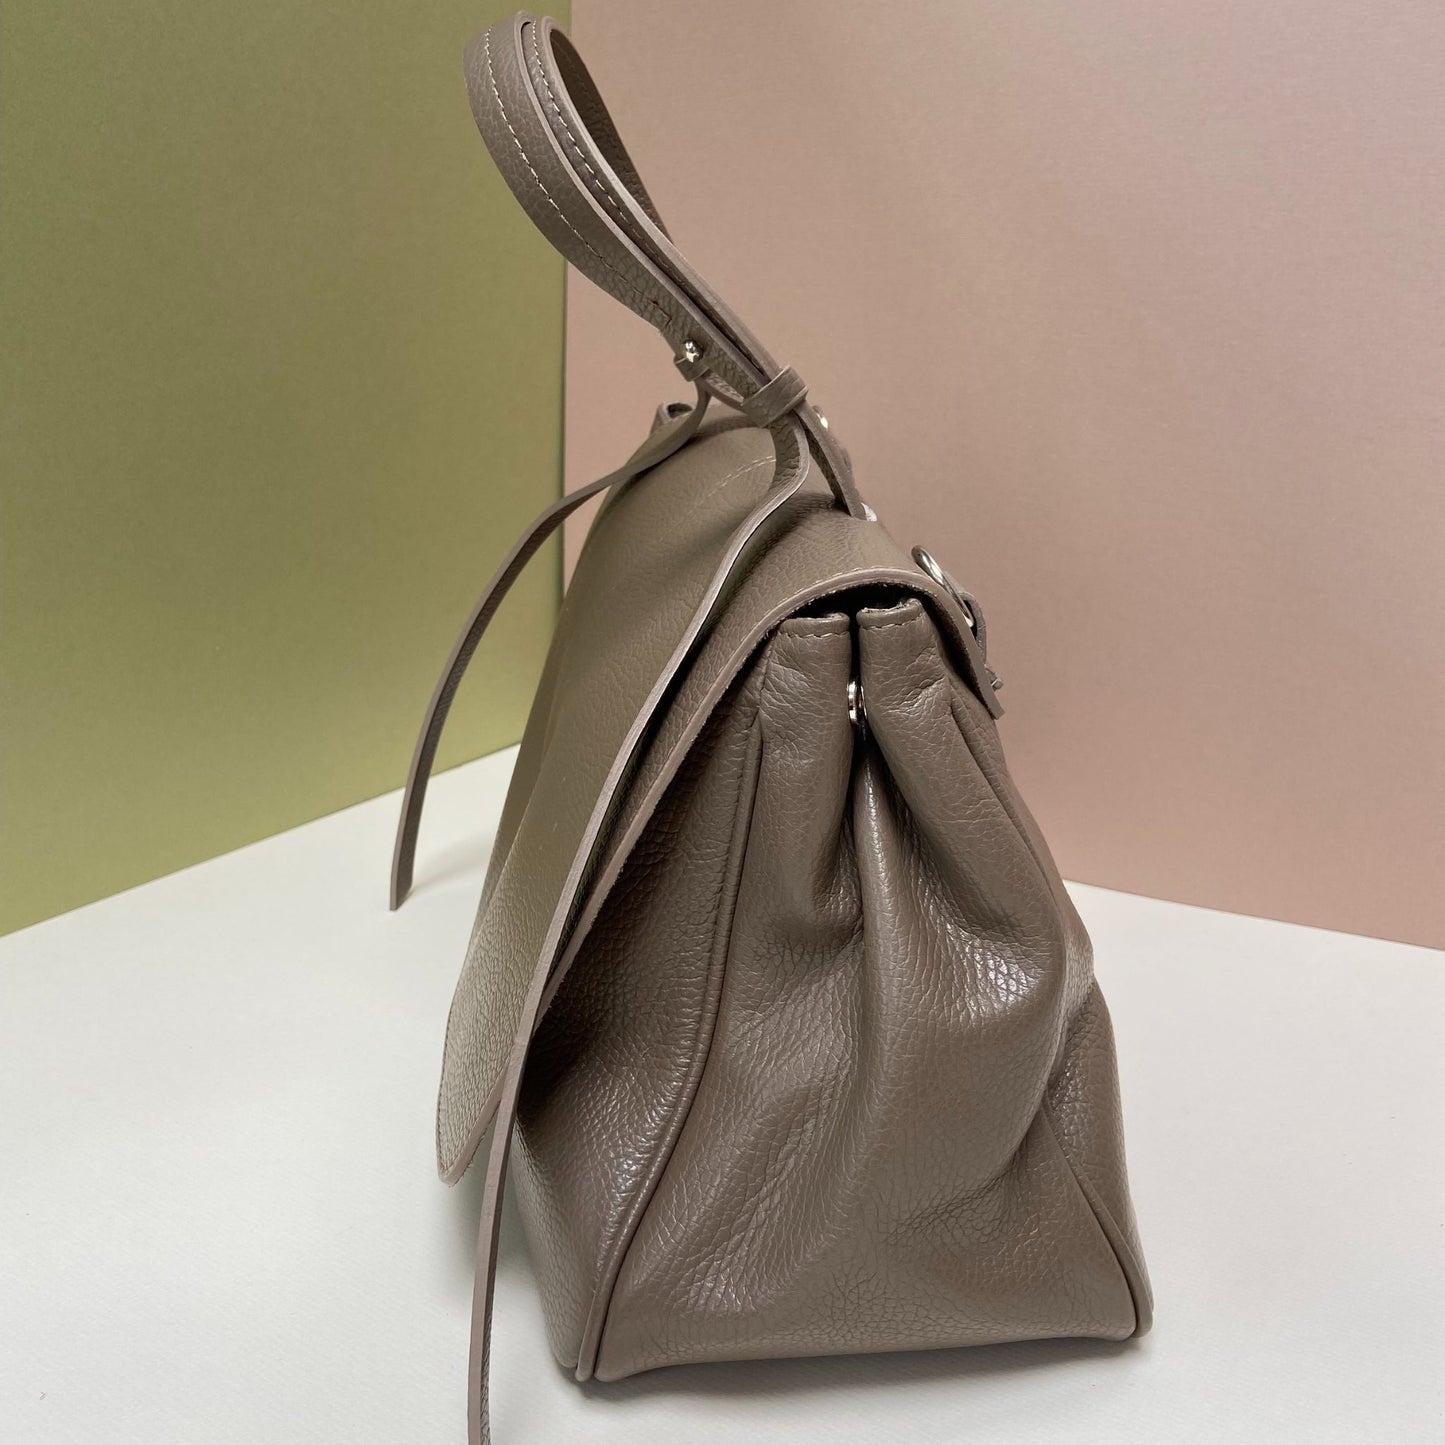 The Leather Strap Detail handbag